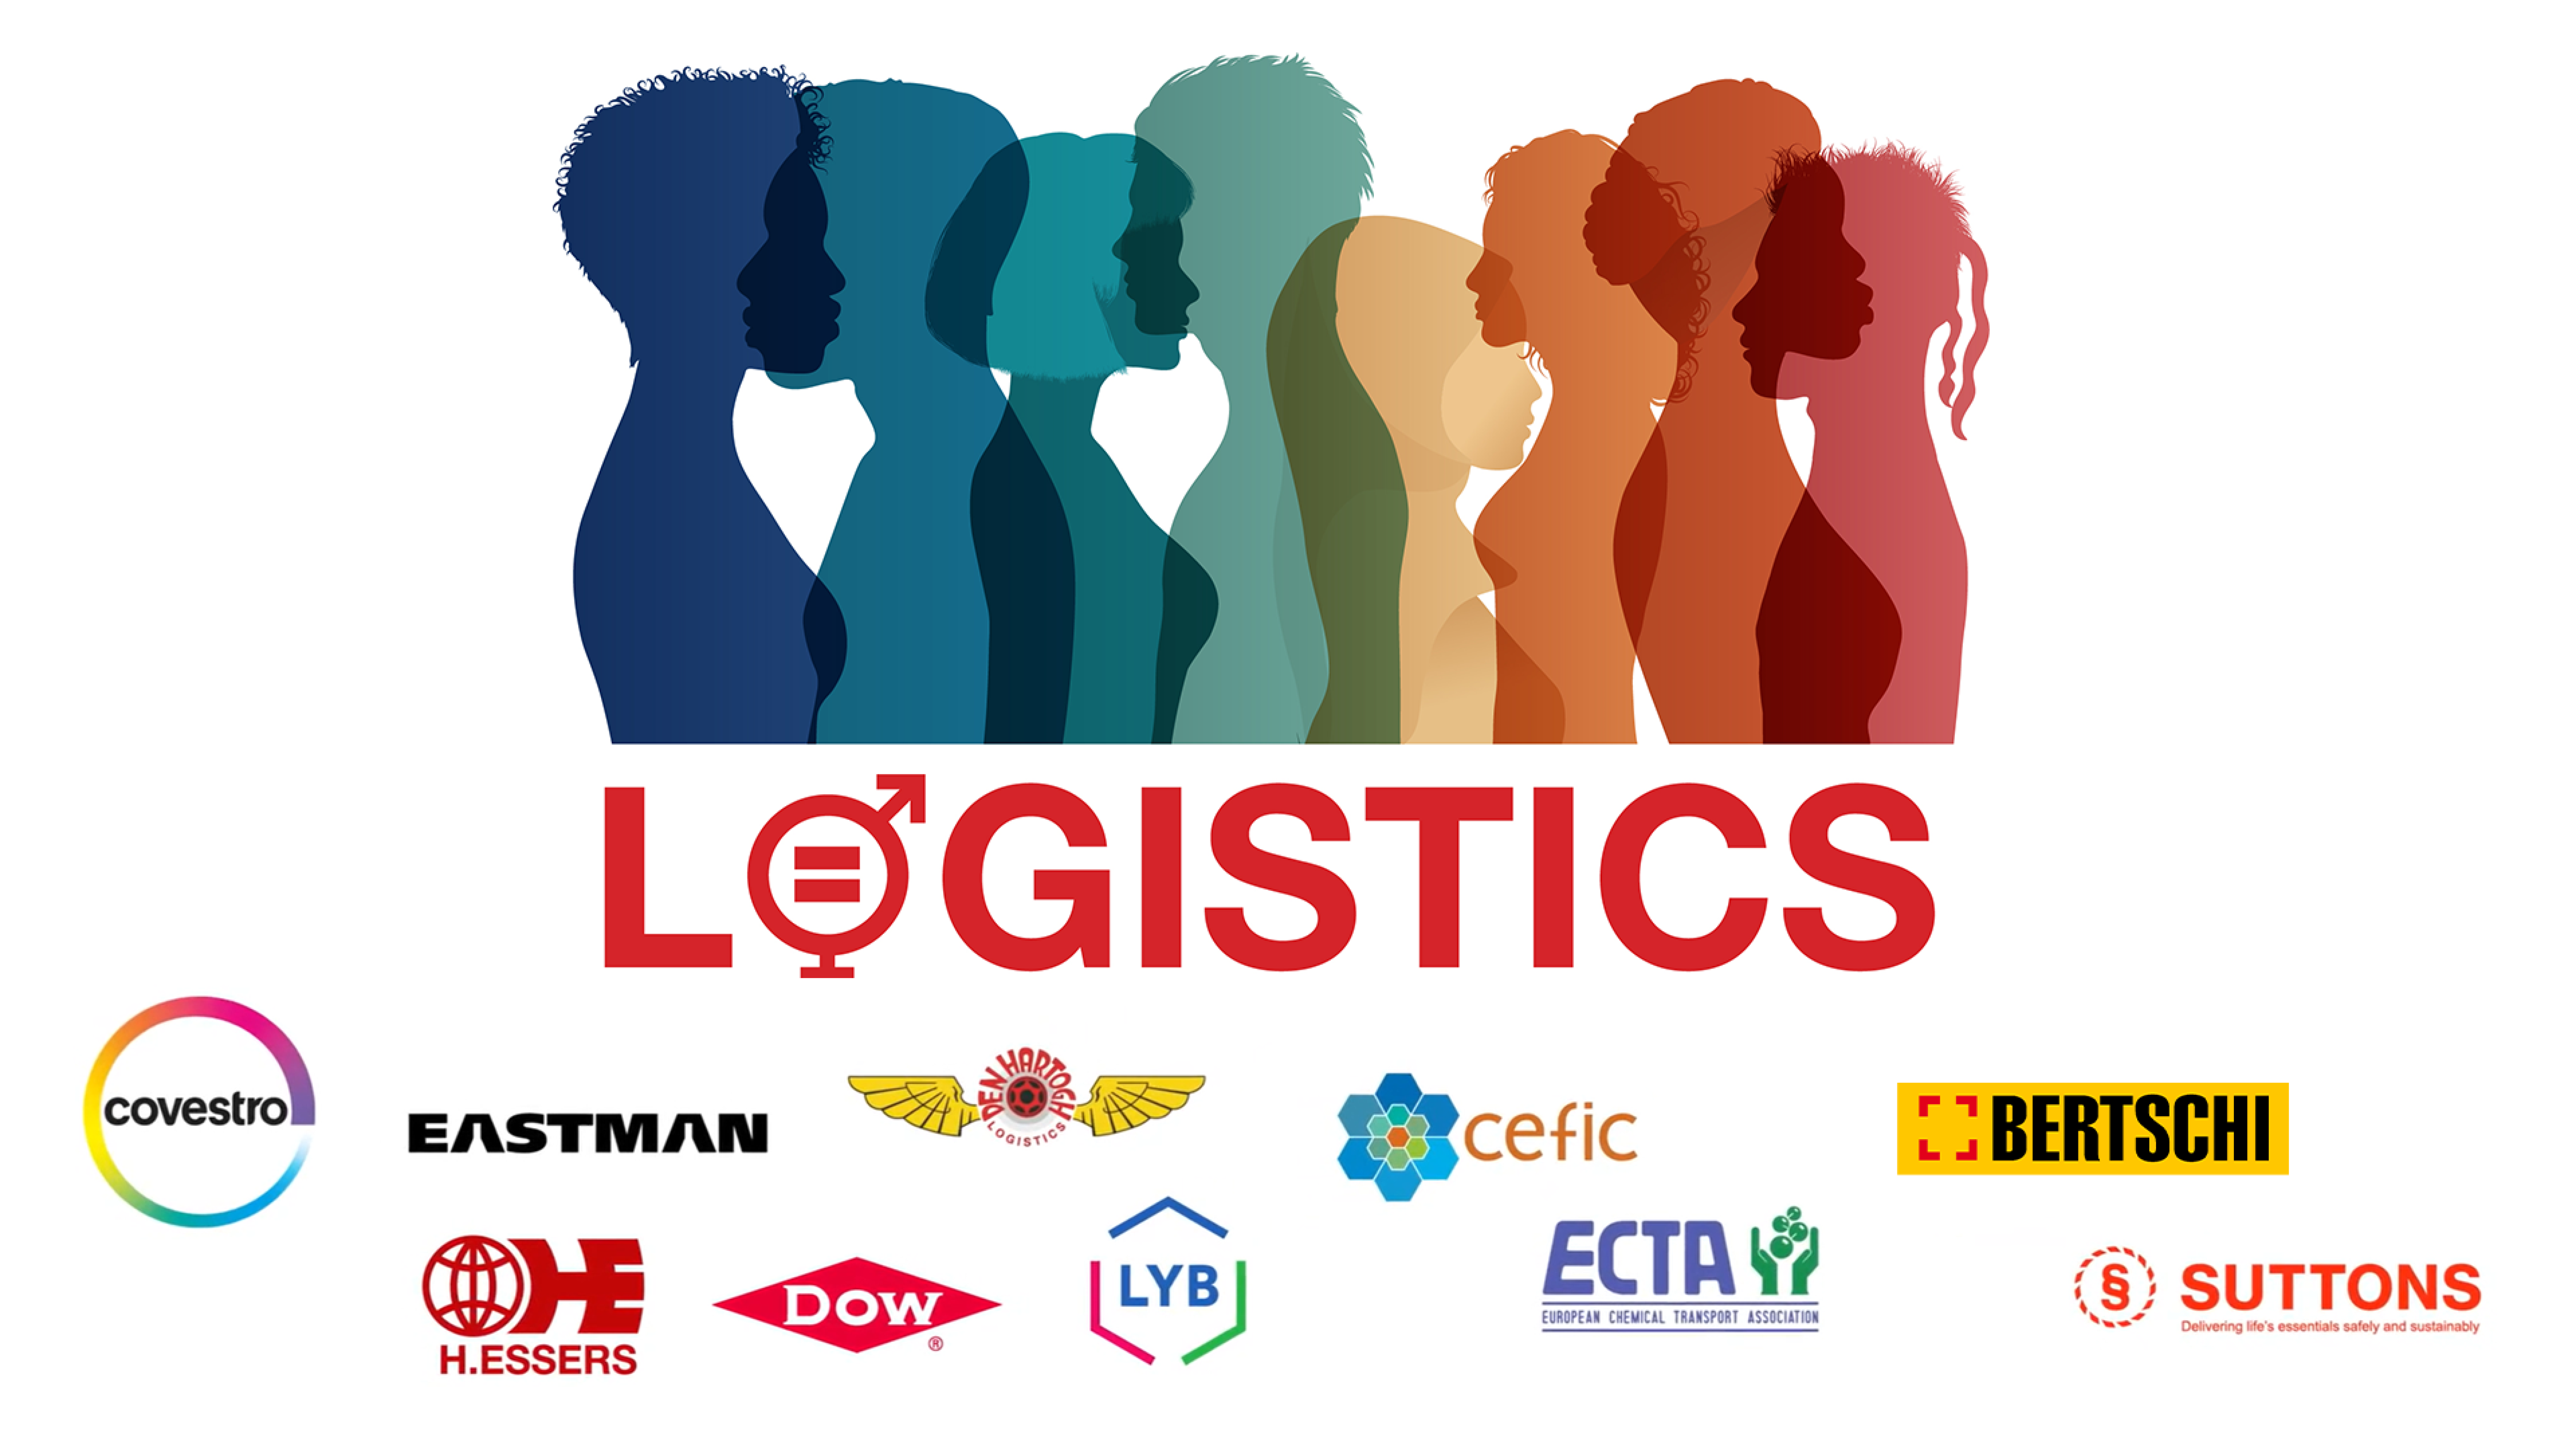 Women in Logistics Logo with partner logos below